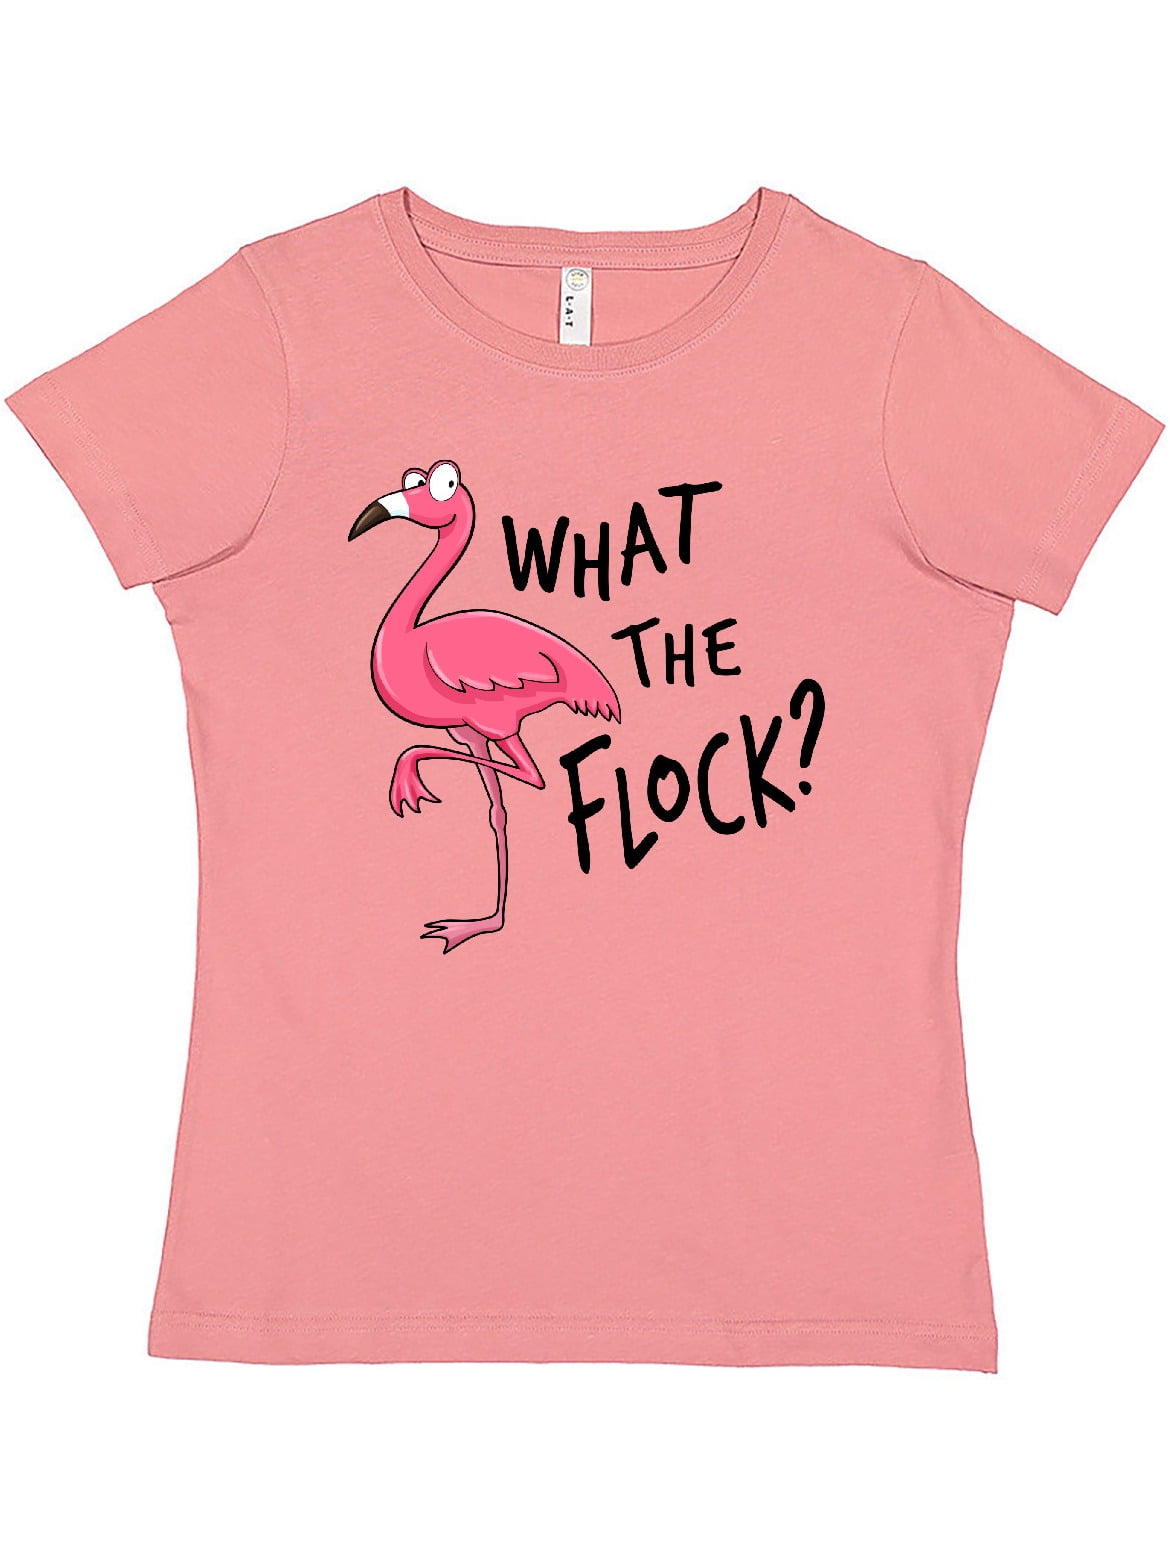 Flamingo T-Shirt Donuts Food Funny Hilarious Top 